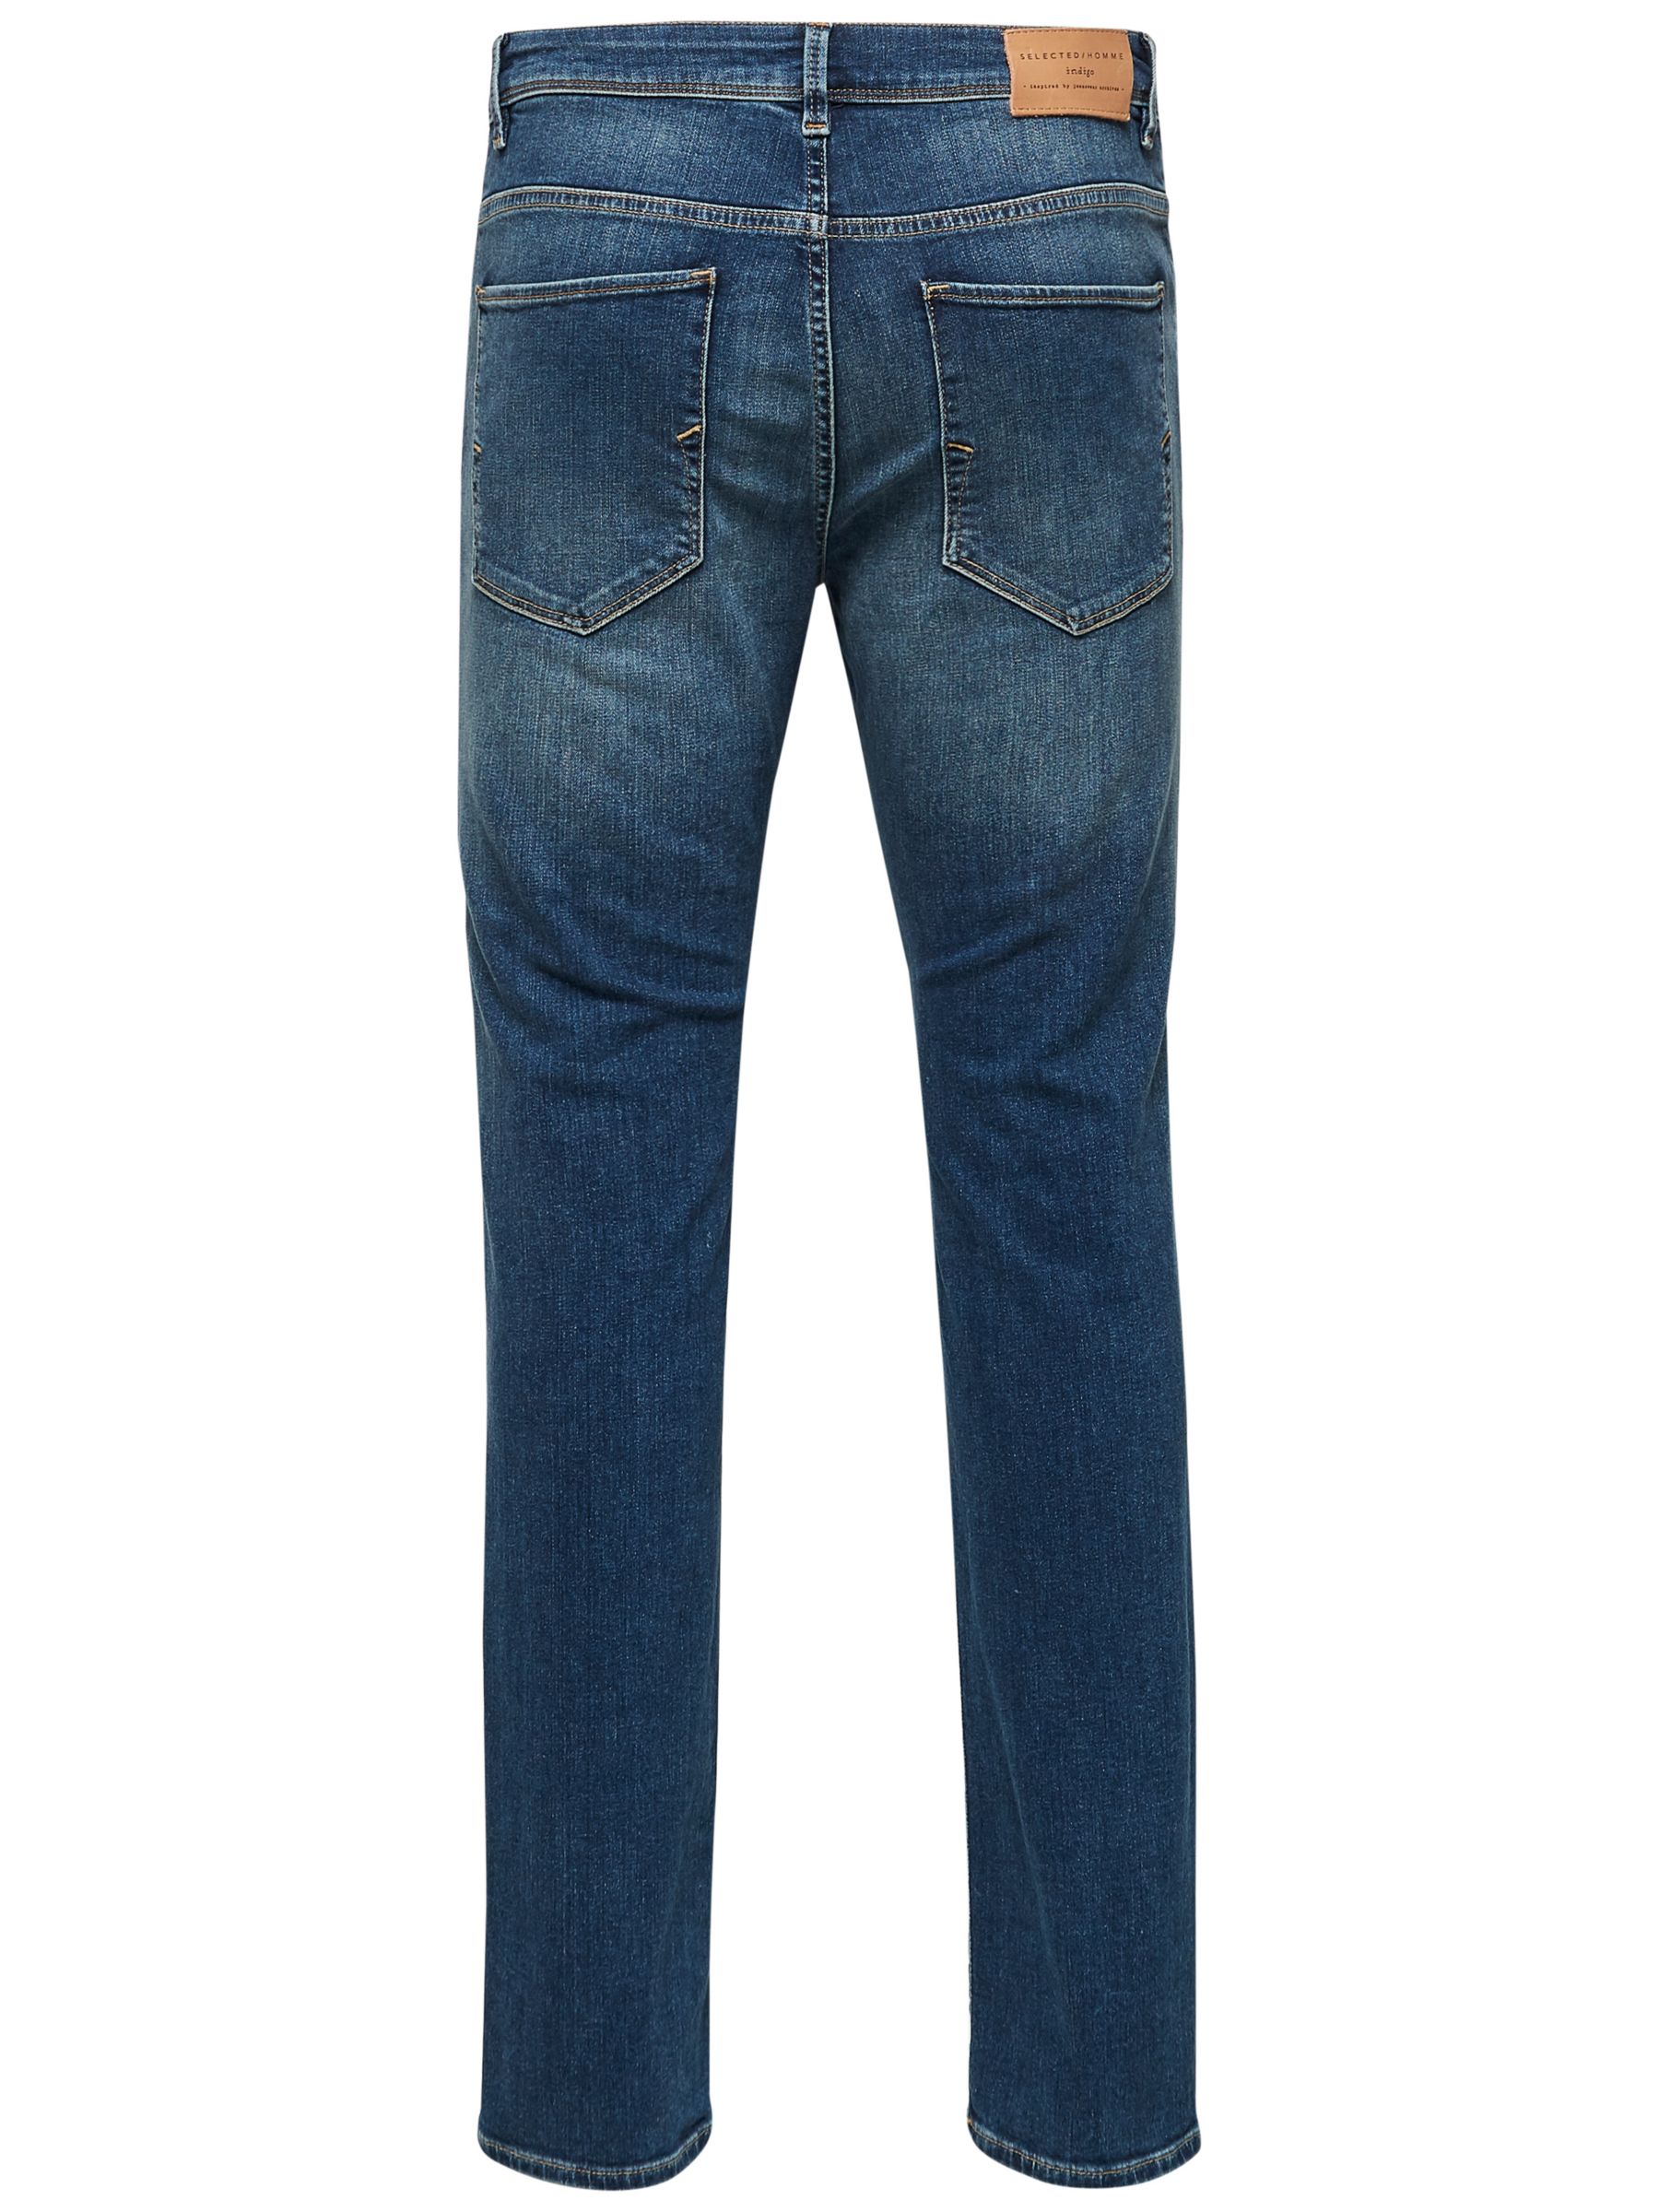 SELECTED HOMME Leon Slim Fit Denim Jeans, Mid Blue at John Lewis & Partners